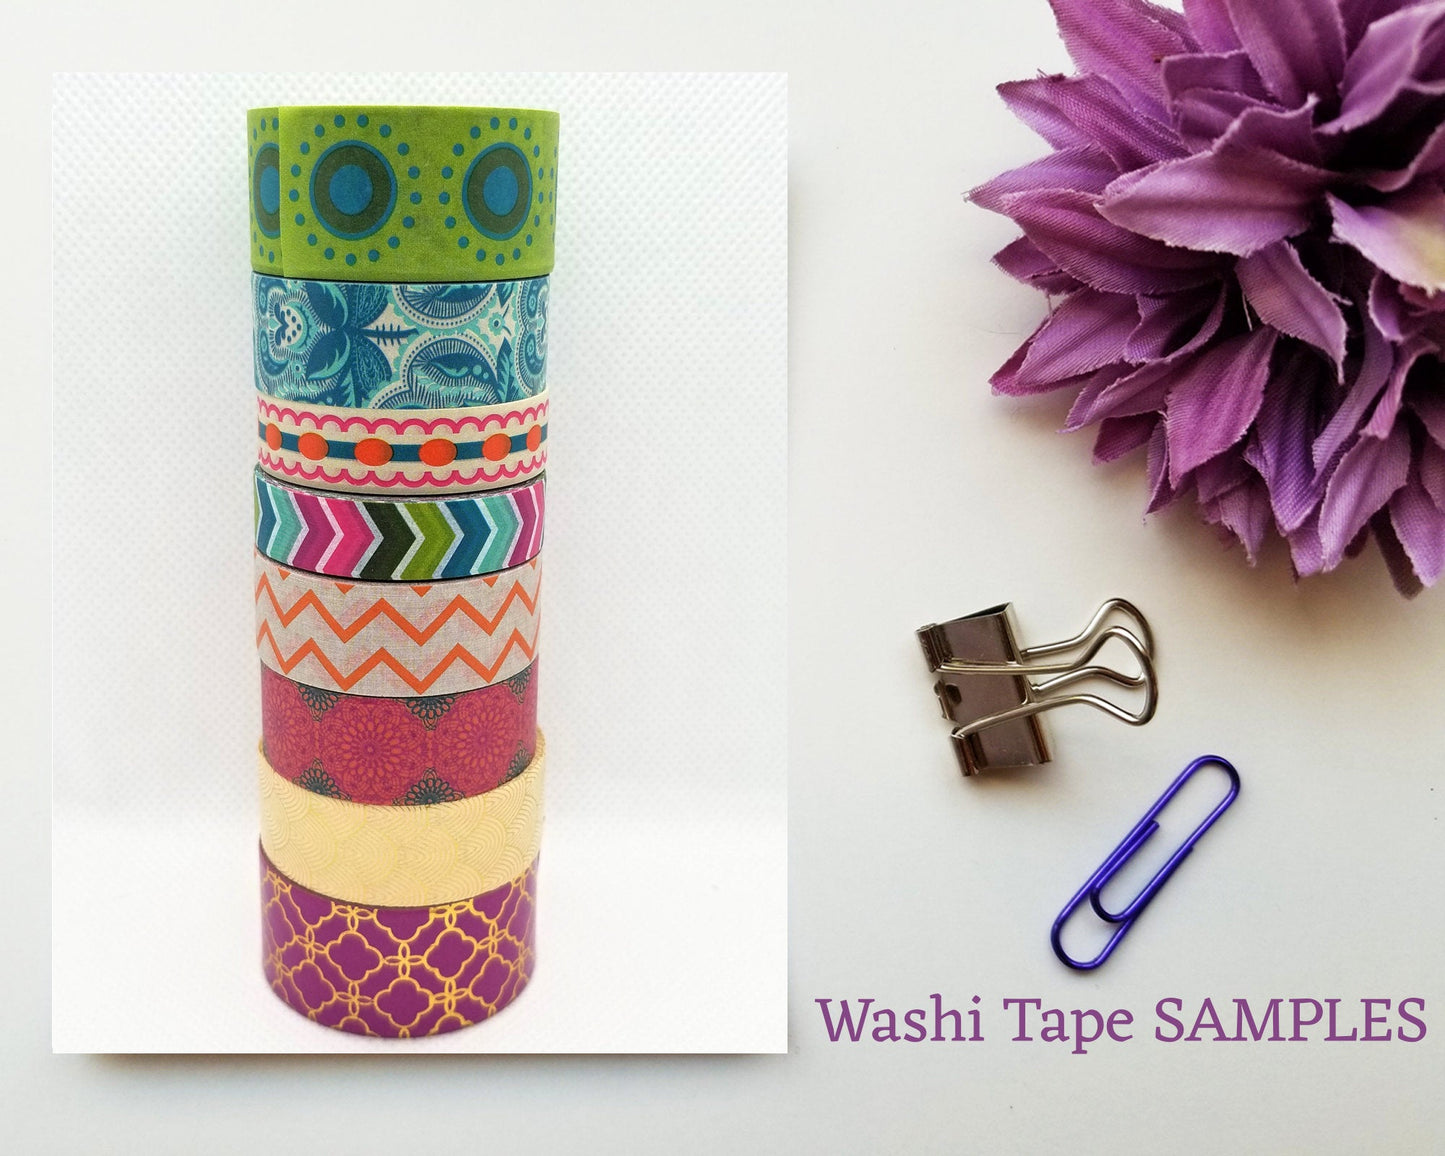 Boho Washi Tape SAMPLES with foil options